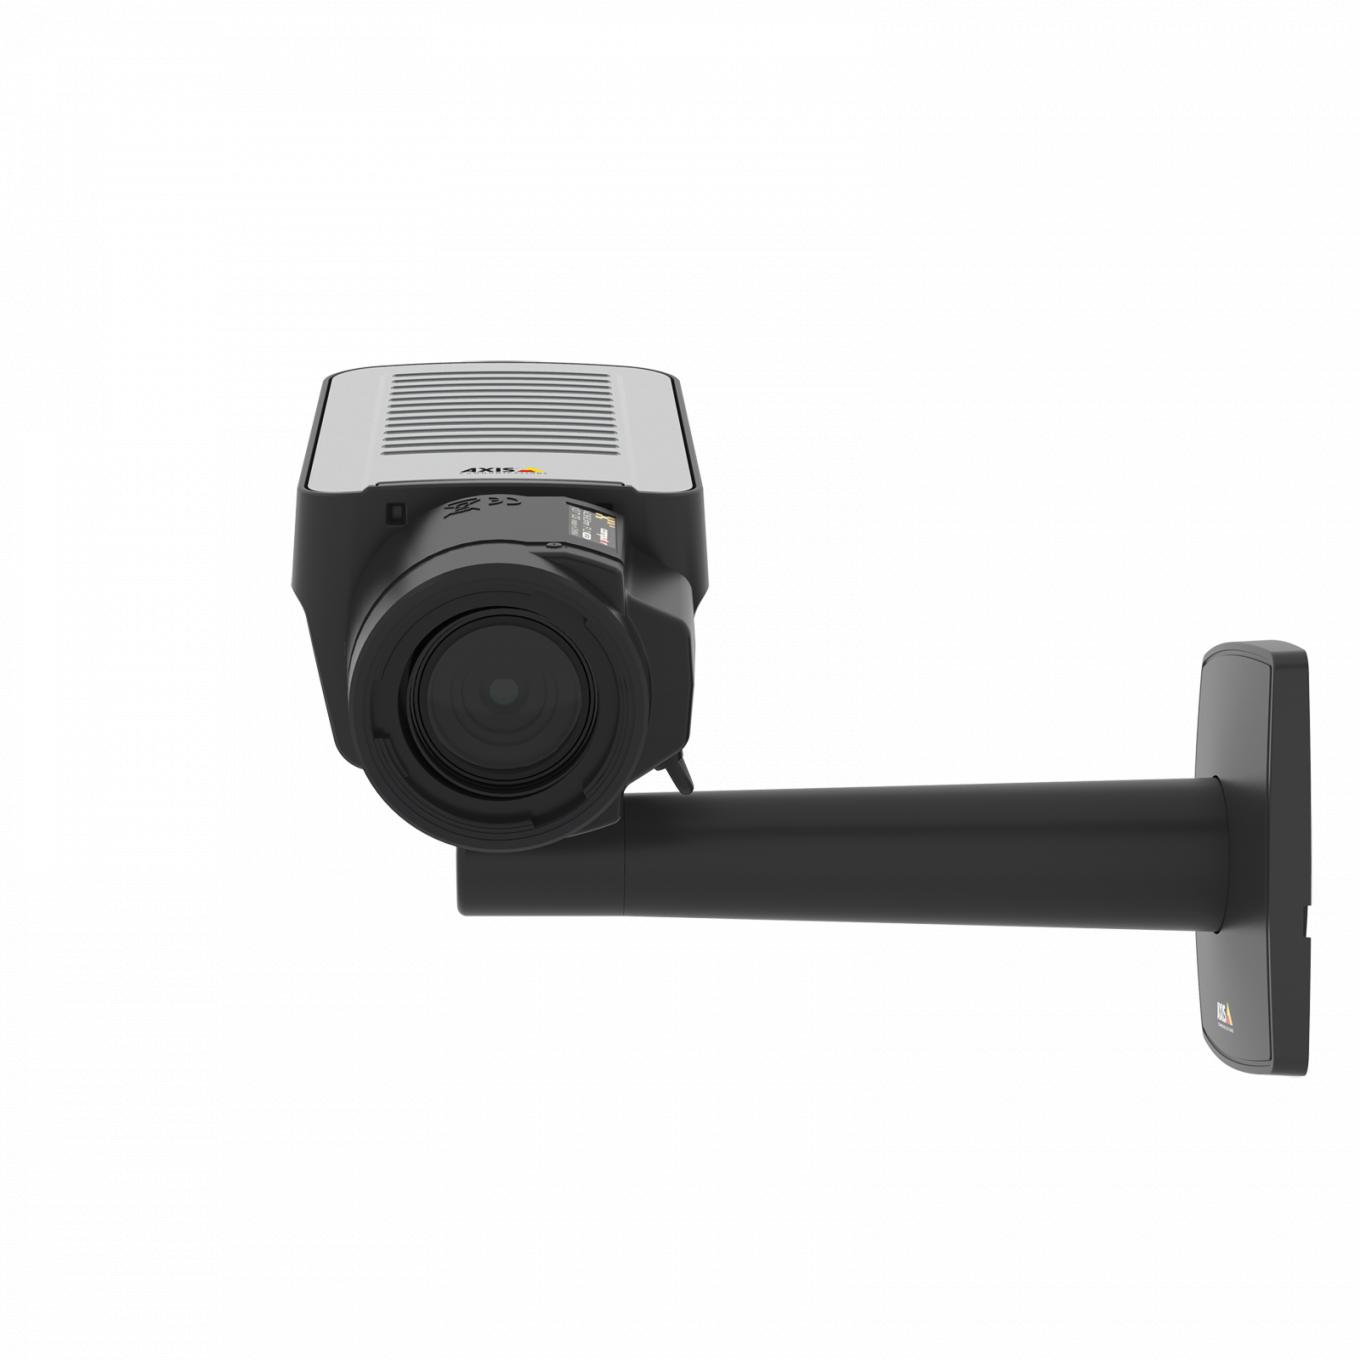 IP-камера AXIS Q1615 Mk III IP Camera, вид спереди